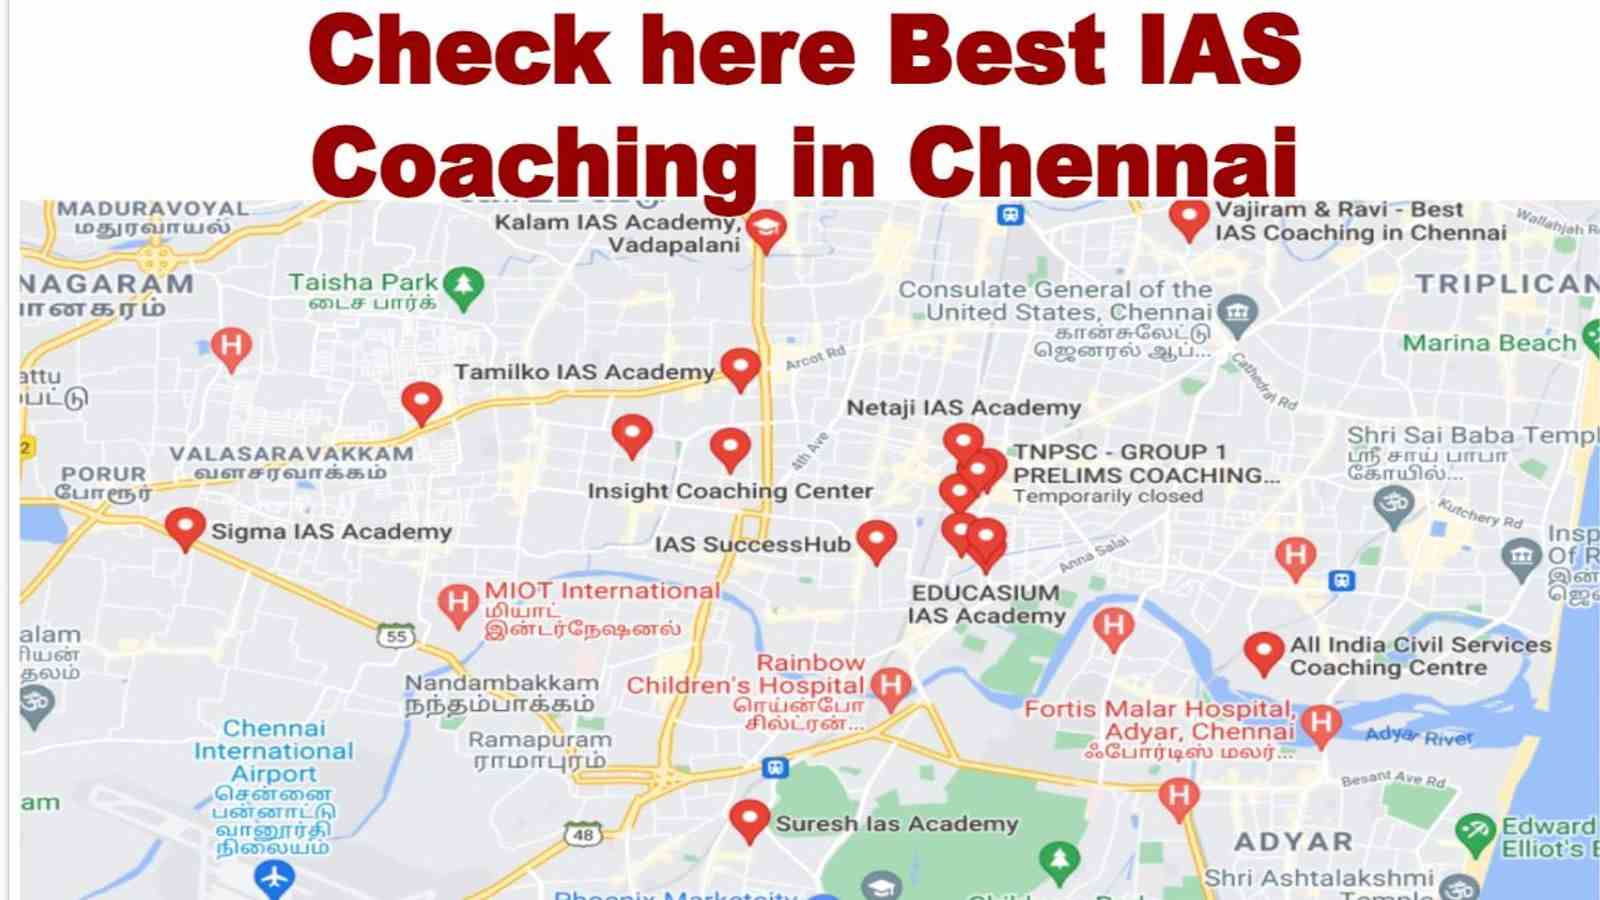 list of best ias coachings in chennai